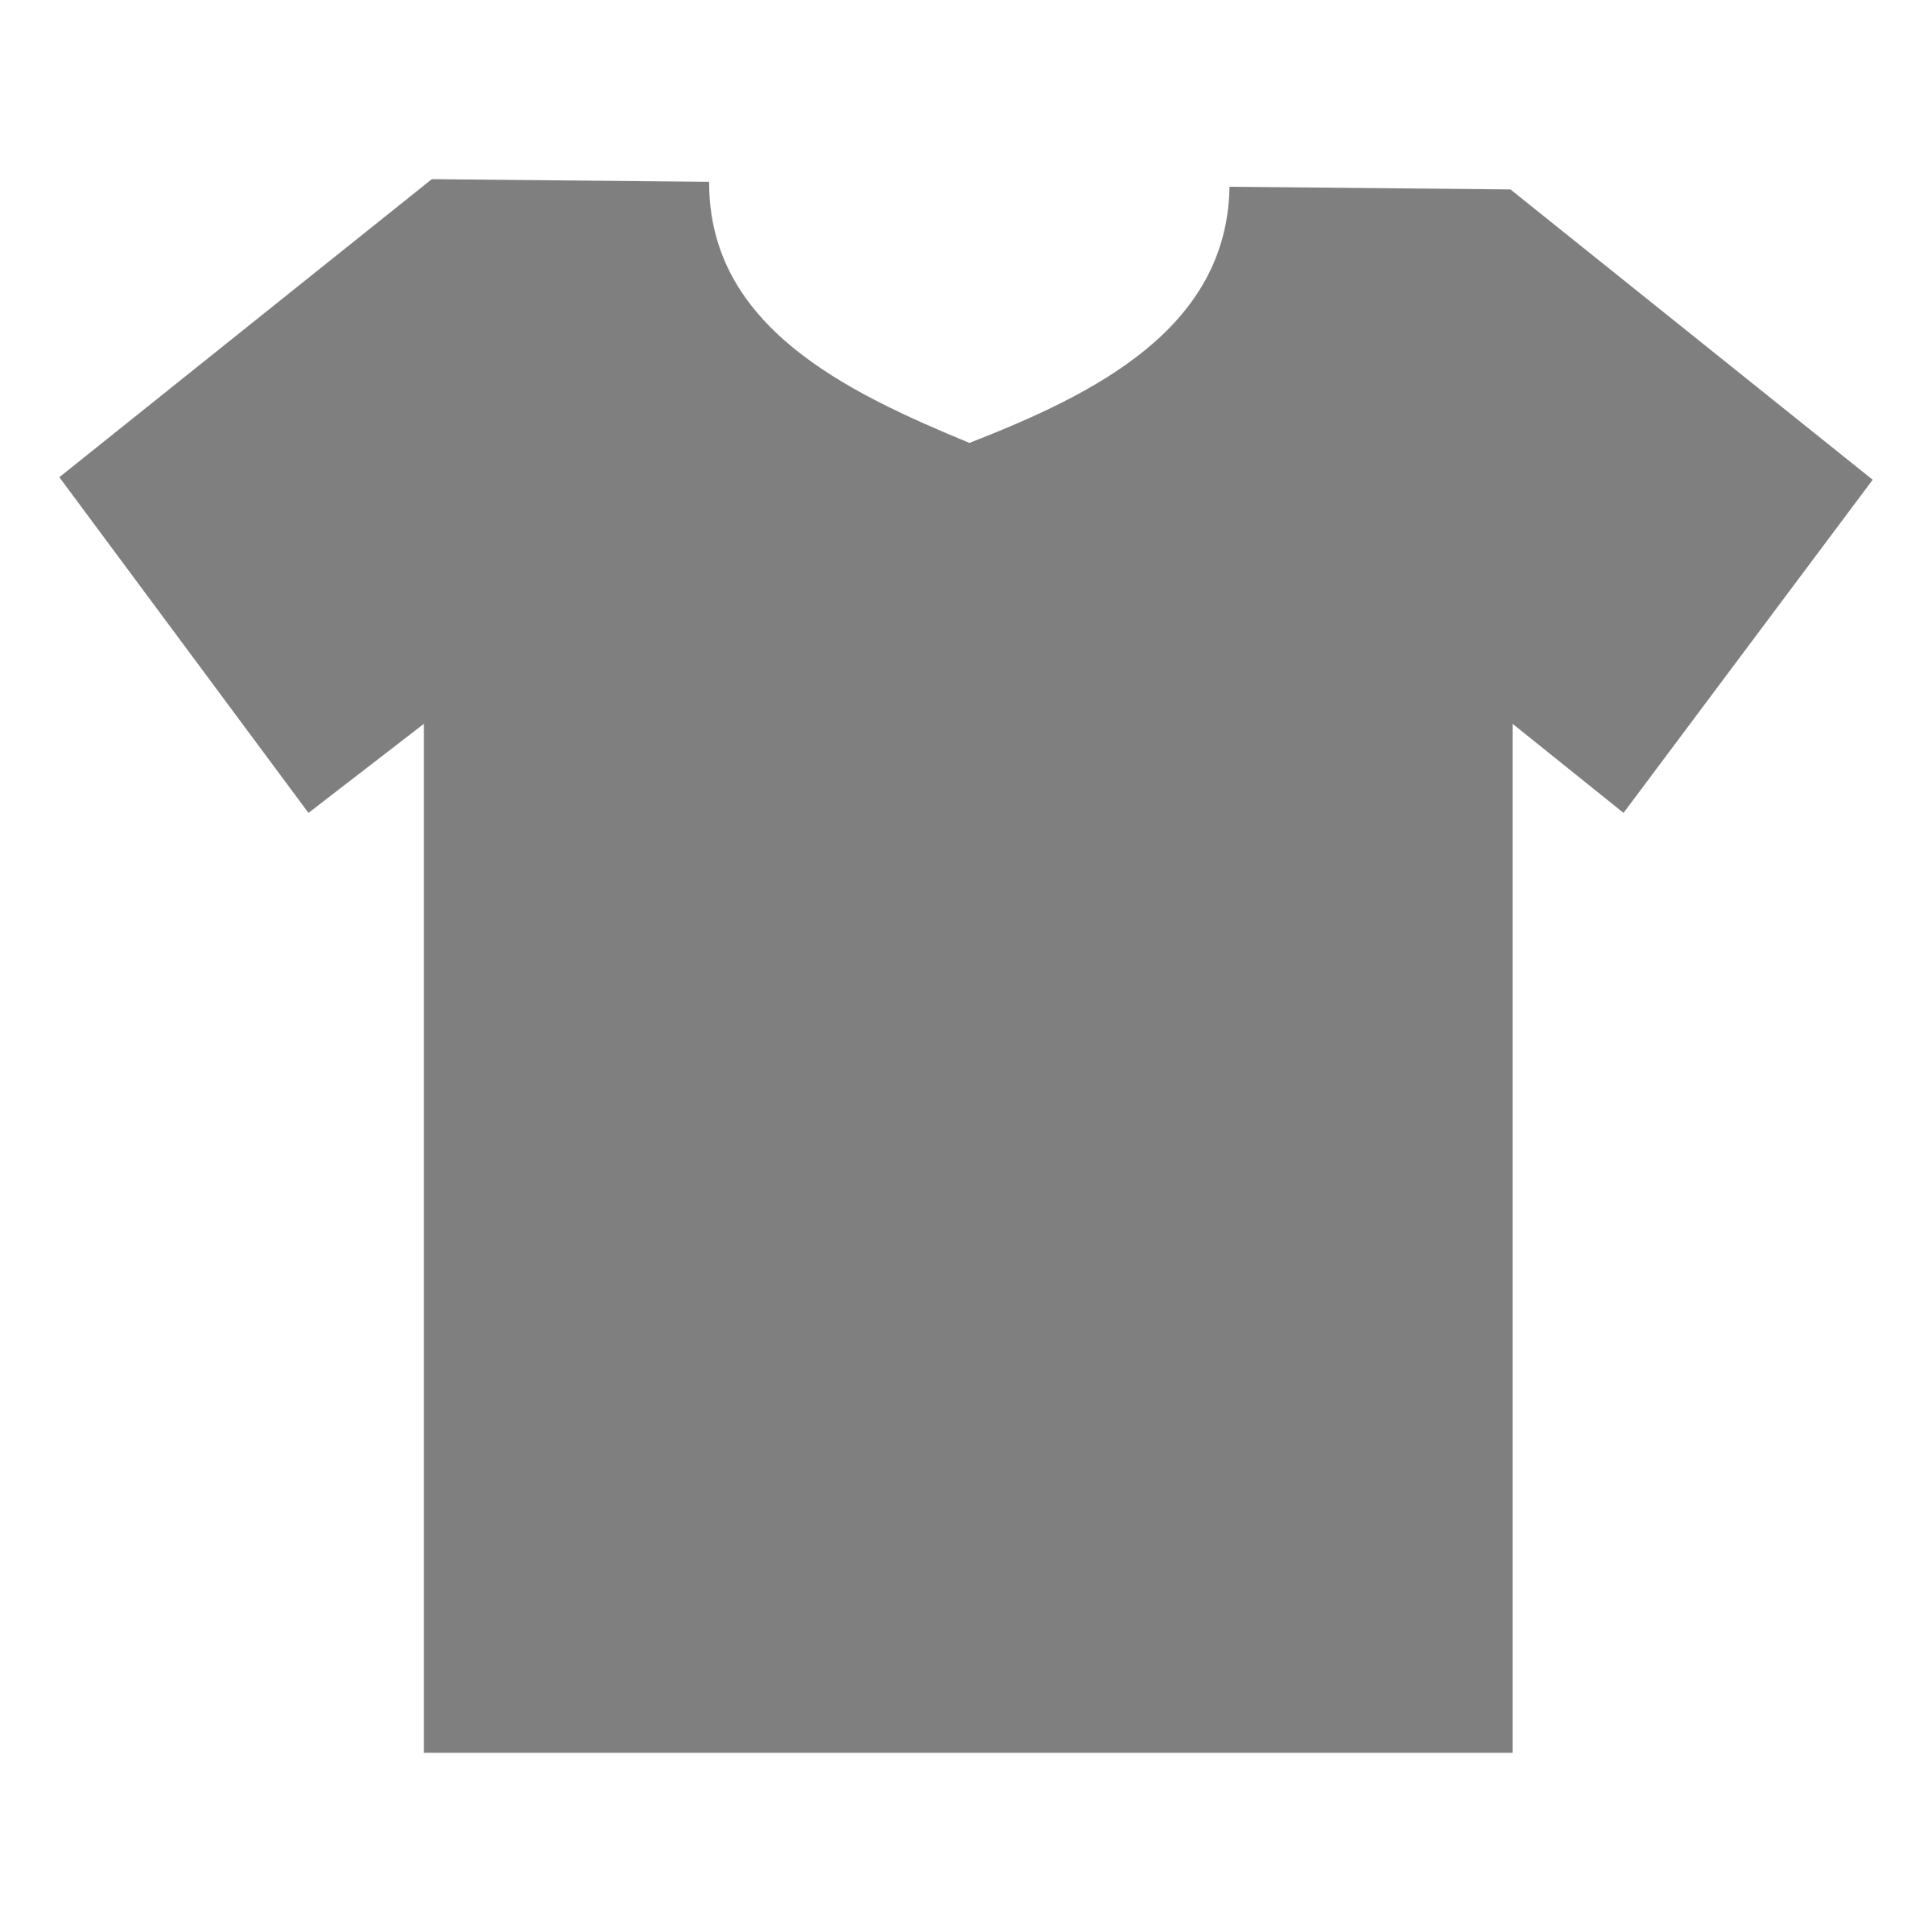 Blank T-shirt Outline #166353